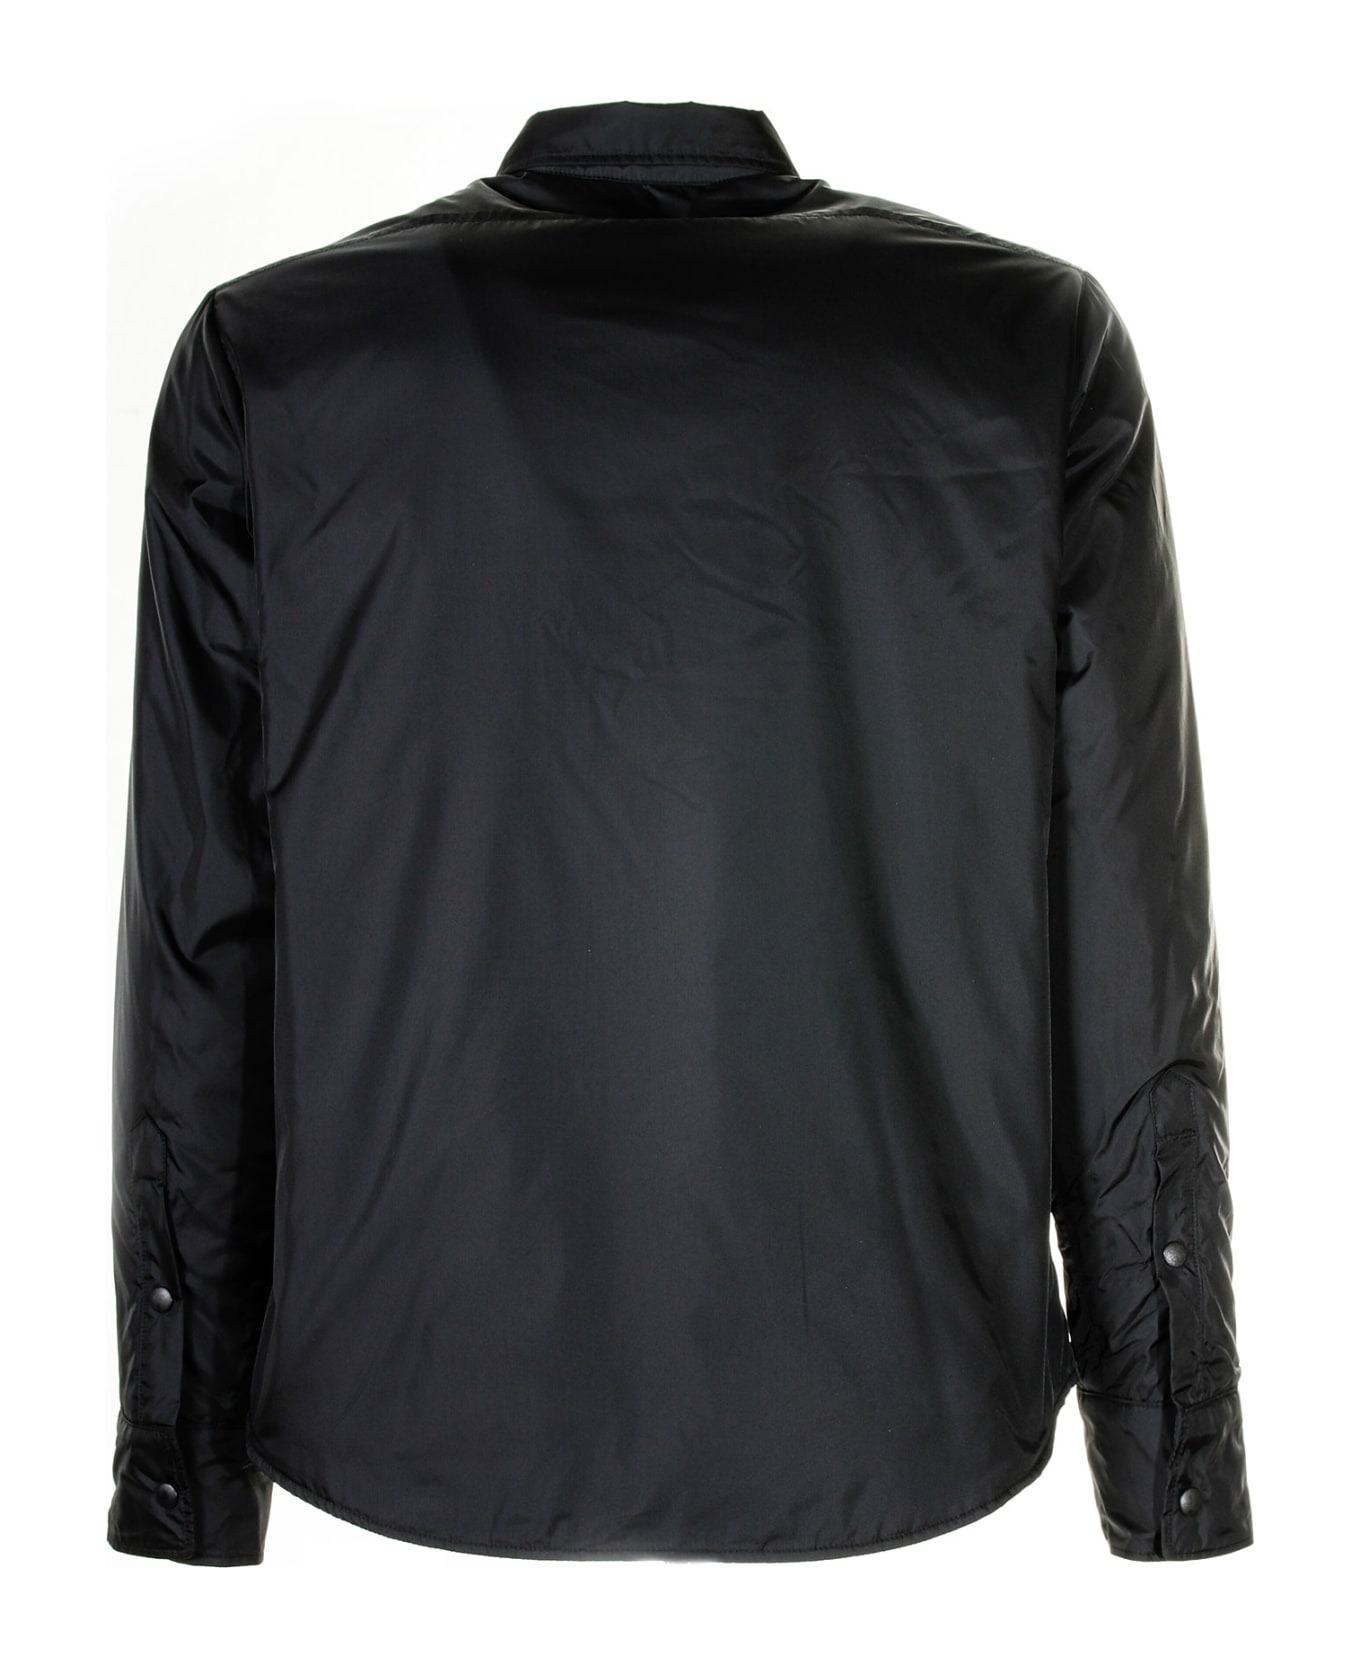 Aspesi Shirt Jacket With Buttons - BLACK NERO